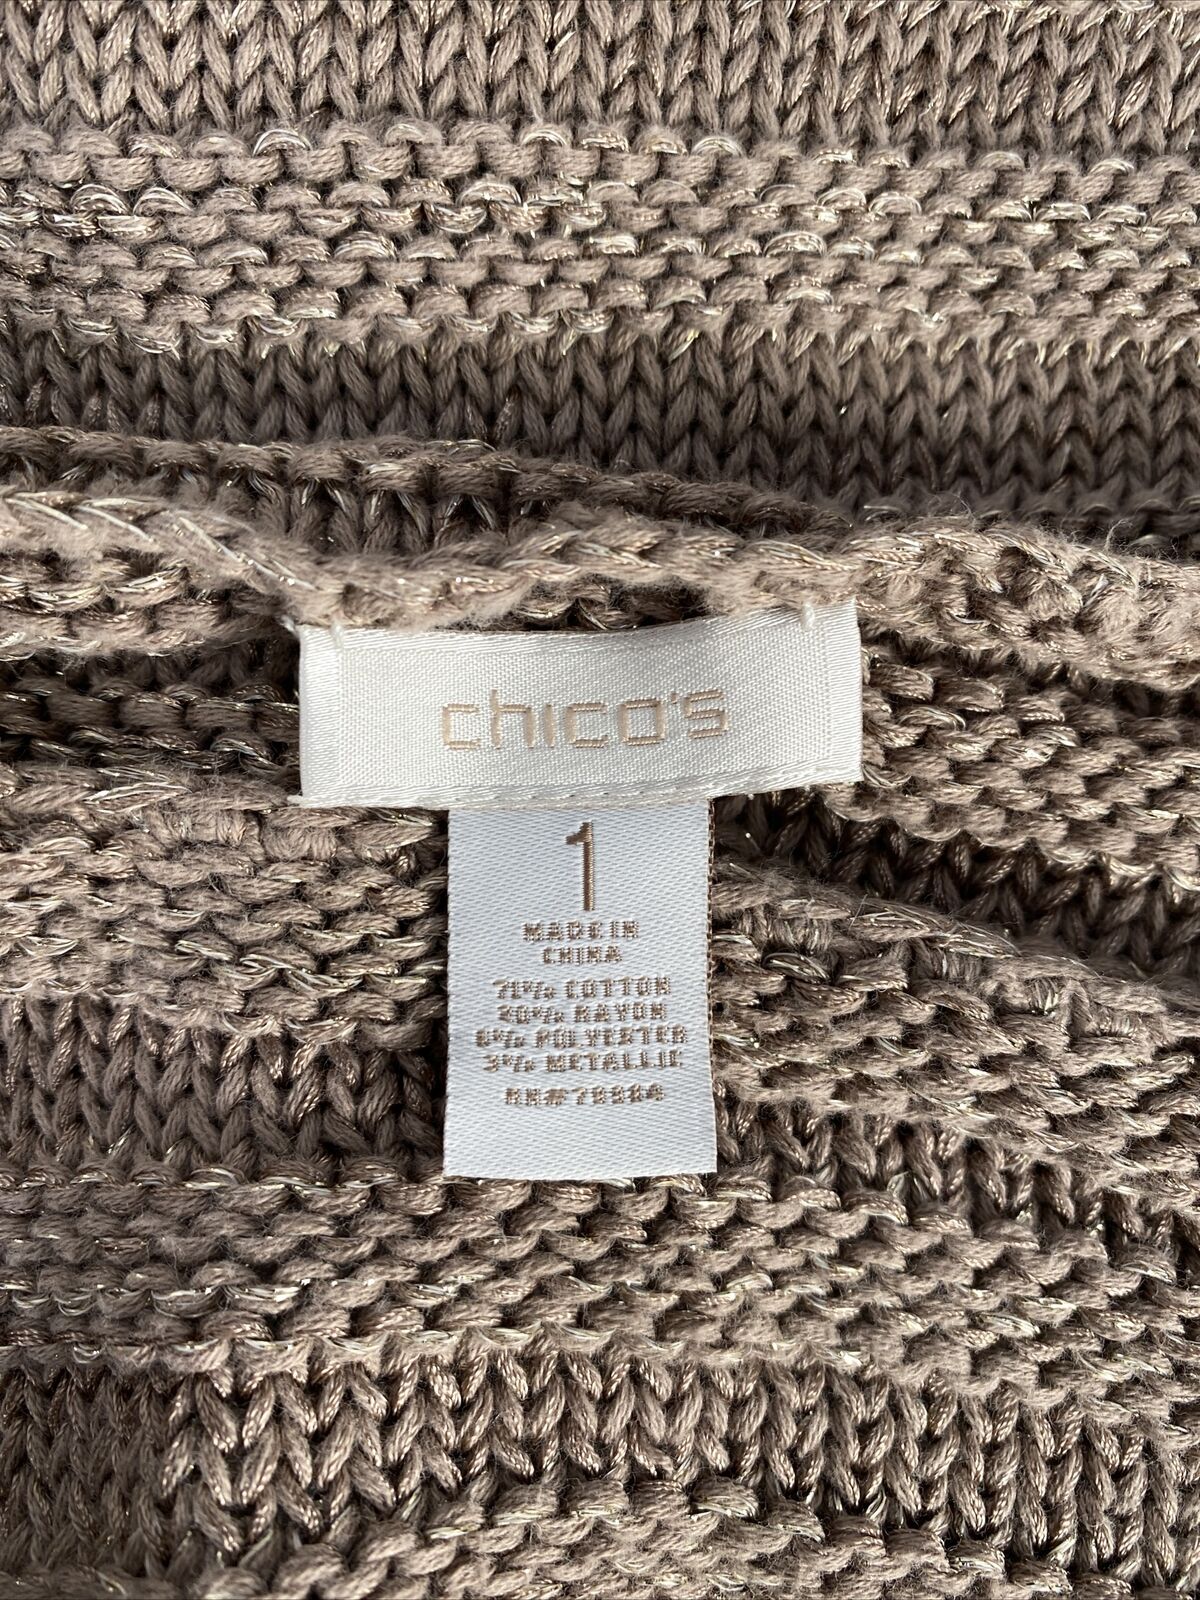 Chicos Women's Brown Metallic 3/4 Sleeve Knit Sweater Sz 1/M